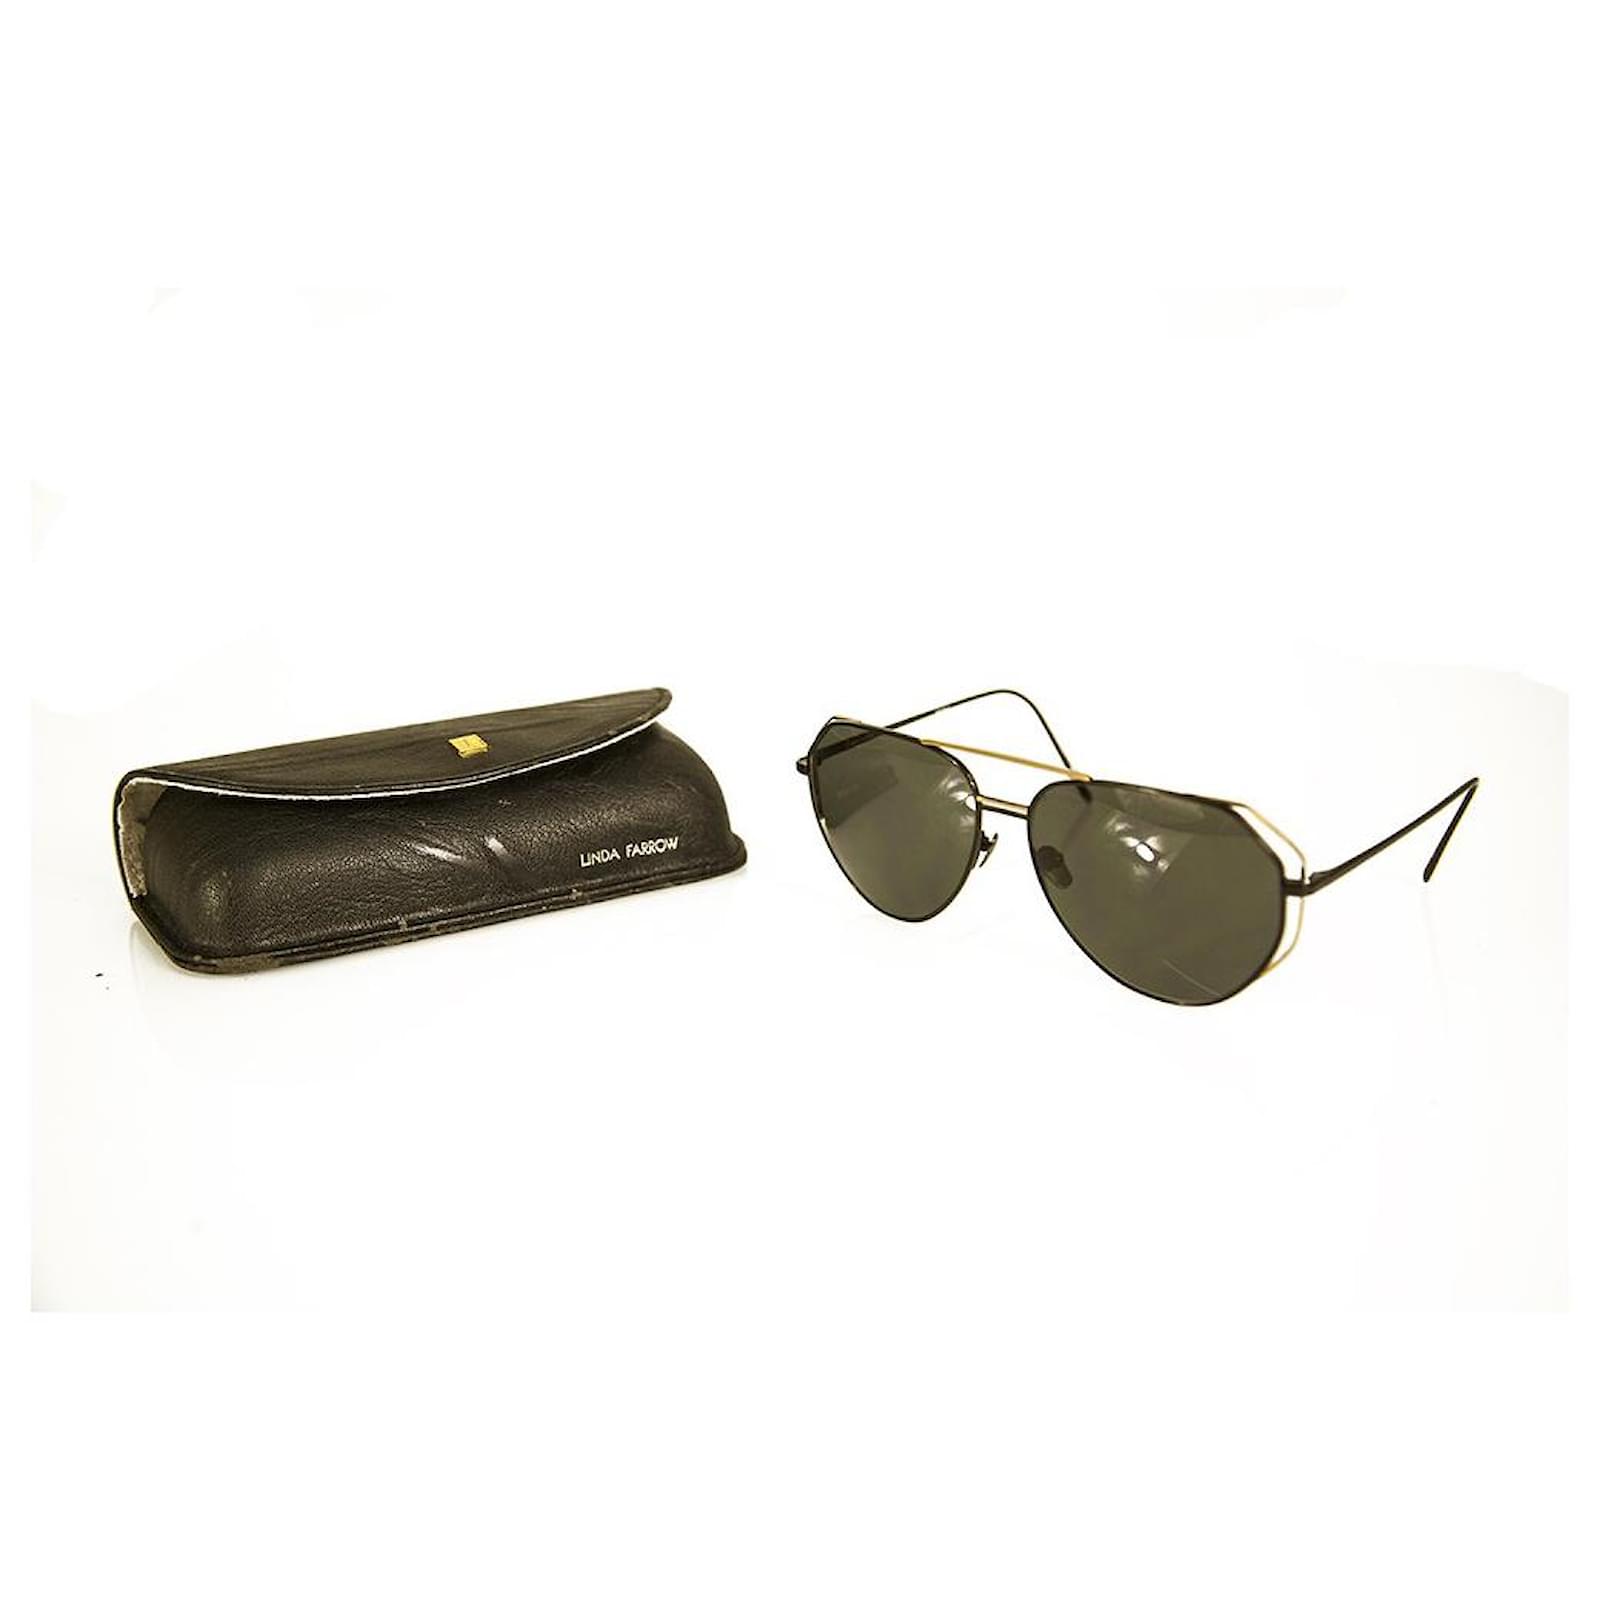 Yves Saint Laurent - Oversized Classic SL 11 Sunglasses - Black - Sunglasses  - Saint Laurent Eyewear - Avvenice